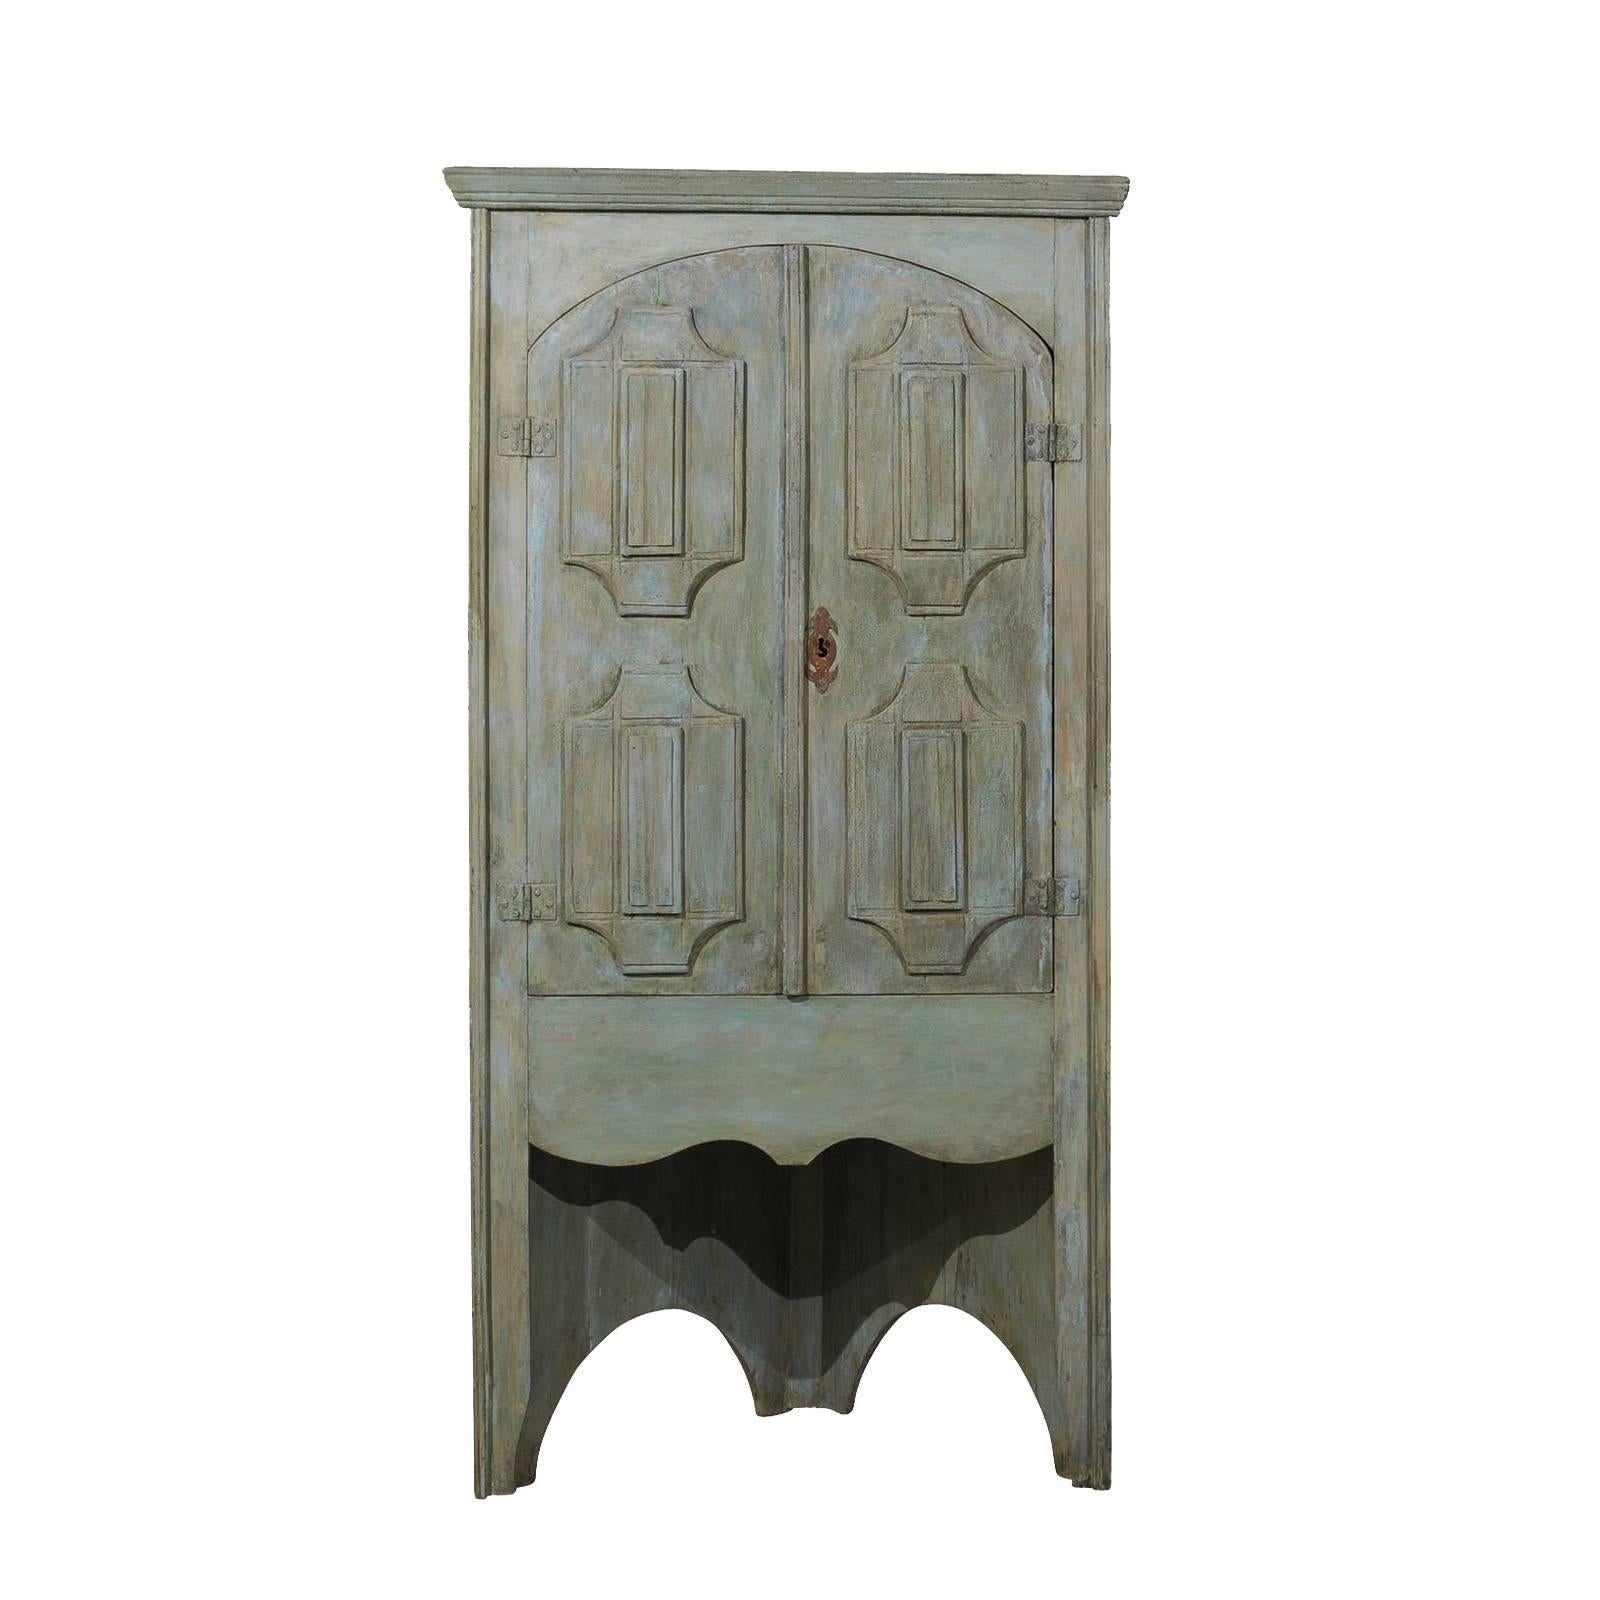 19th Century Painted Wood Corner Cabinet